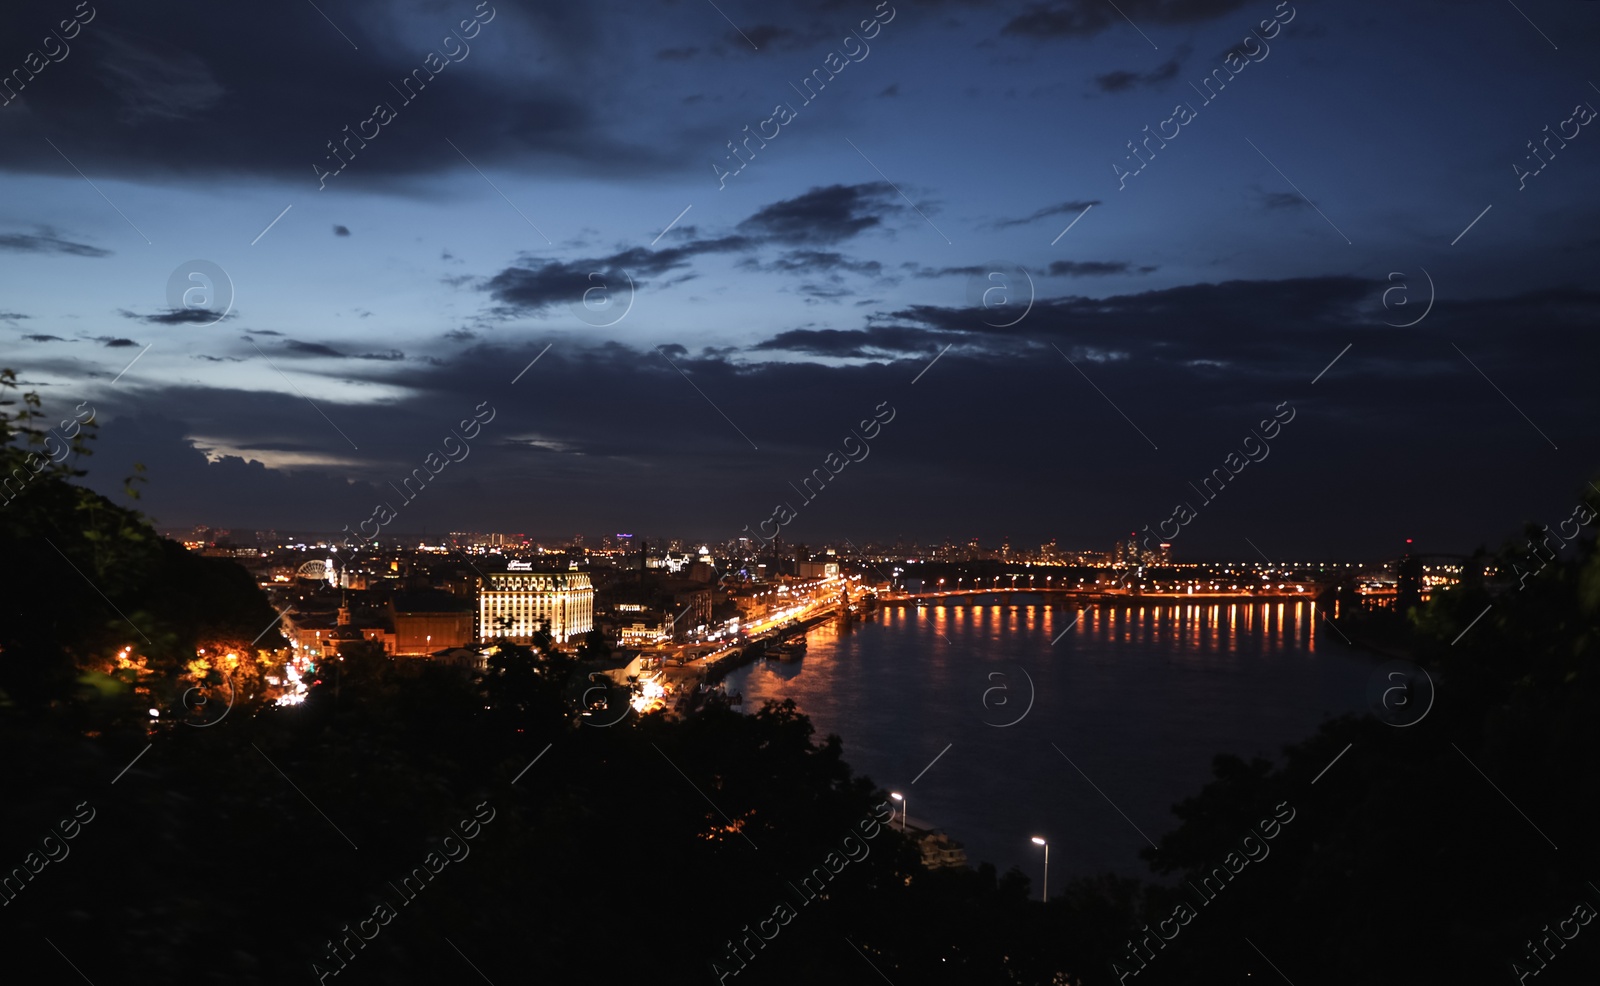 Photo of KYIV, UKRAINE - MAY 21, 2019: Beautiful view of night cityscape with illuminated buildings near river and bridge